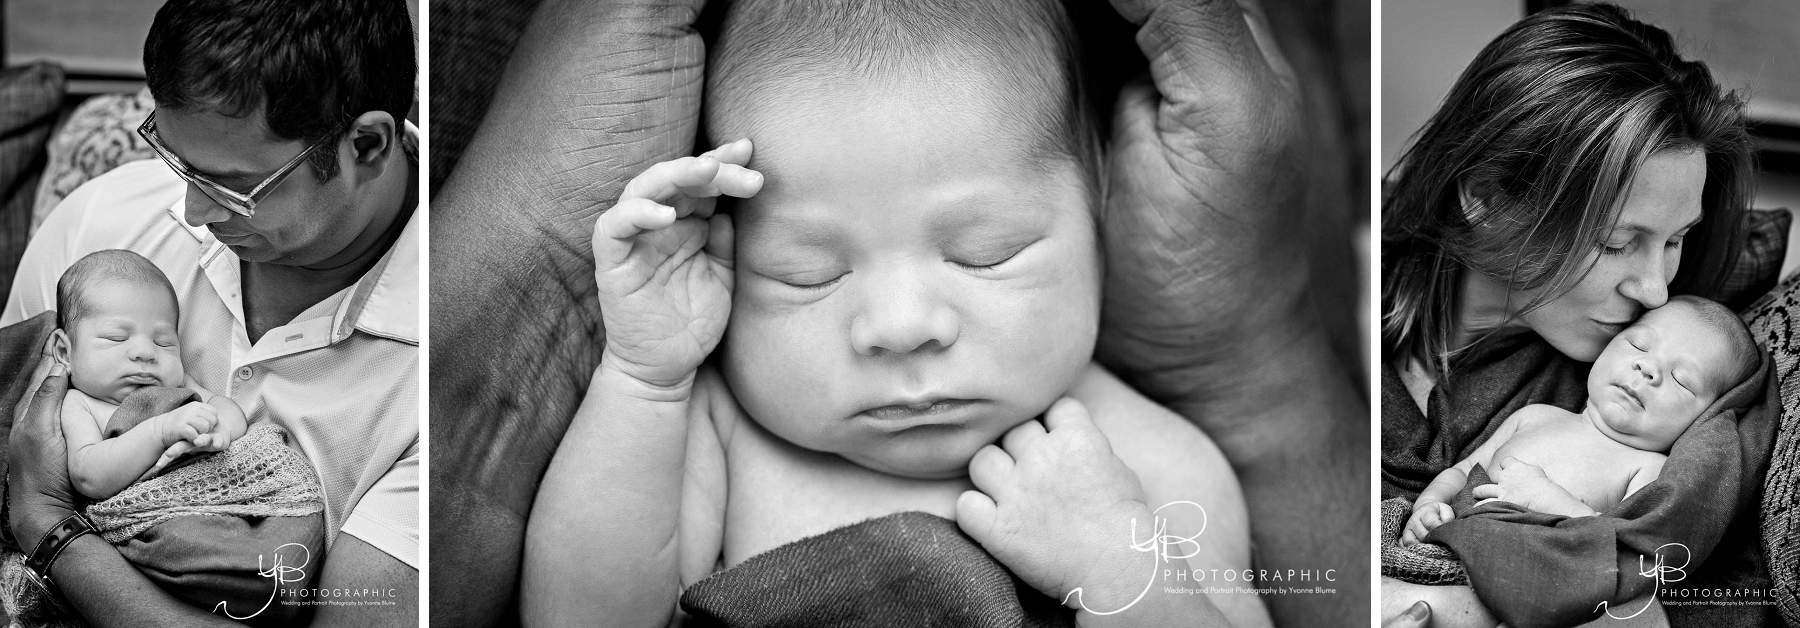 Mum and Dad snuggle their newborn baby boy | YBPHOTOGRAPHIC